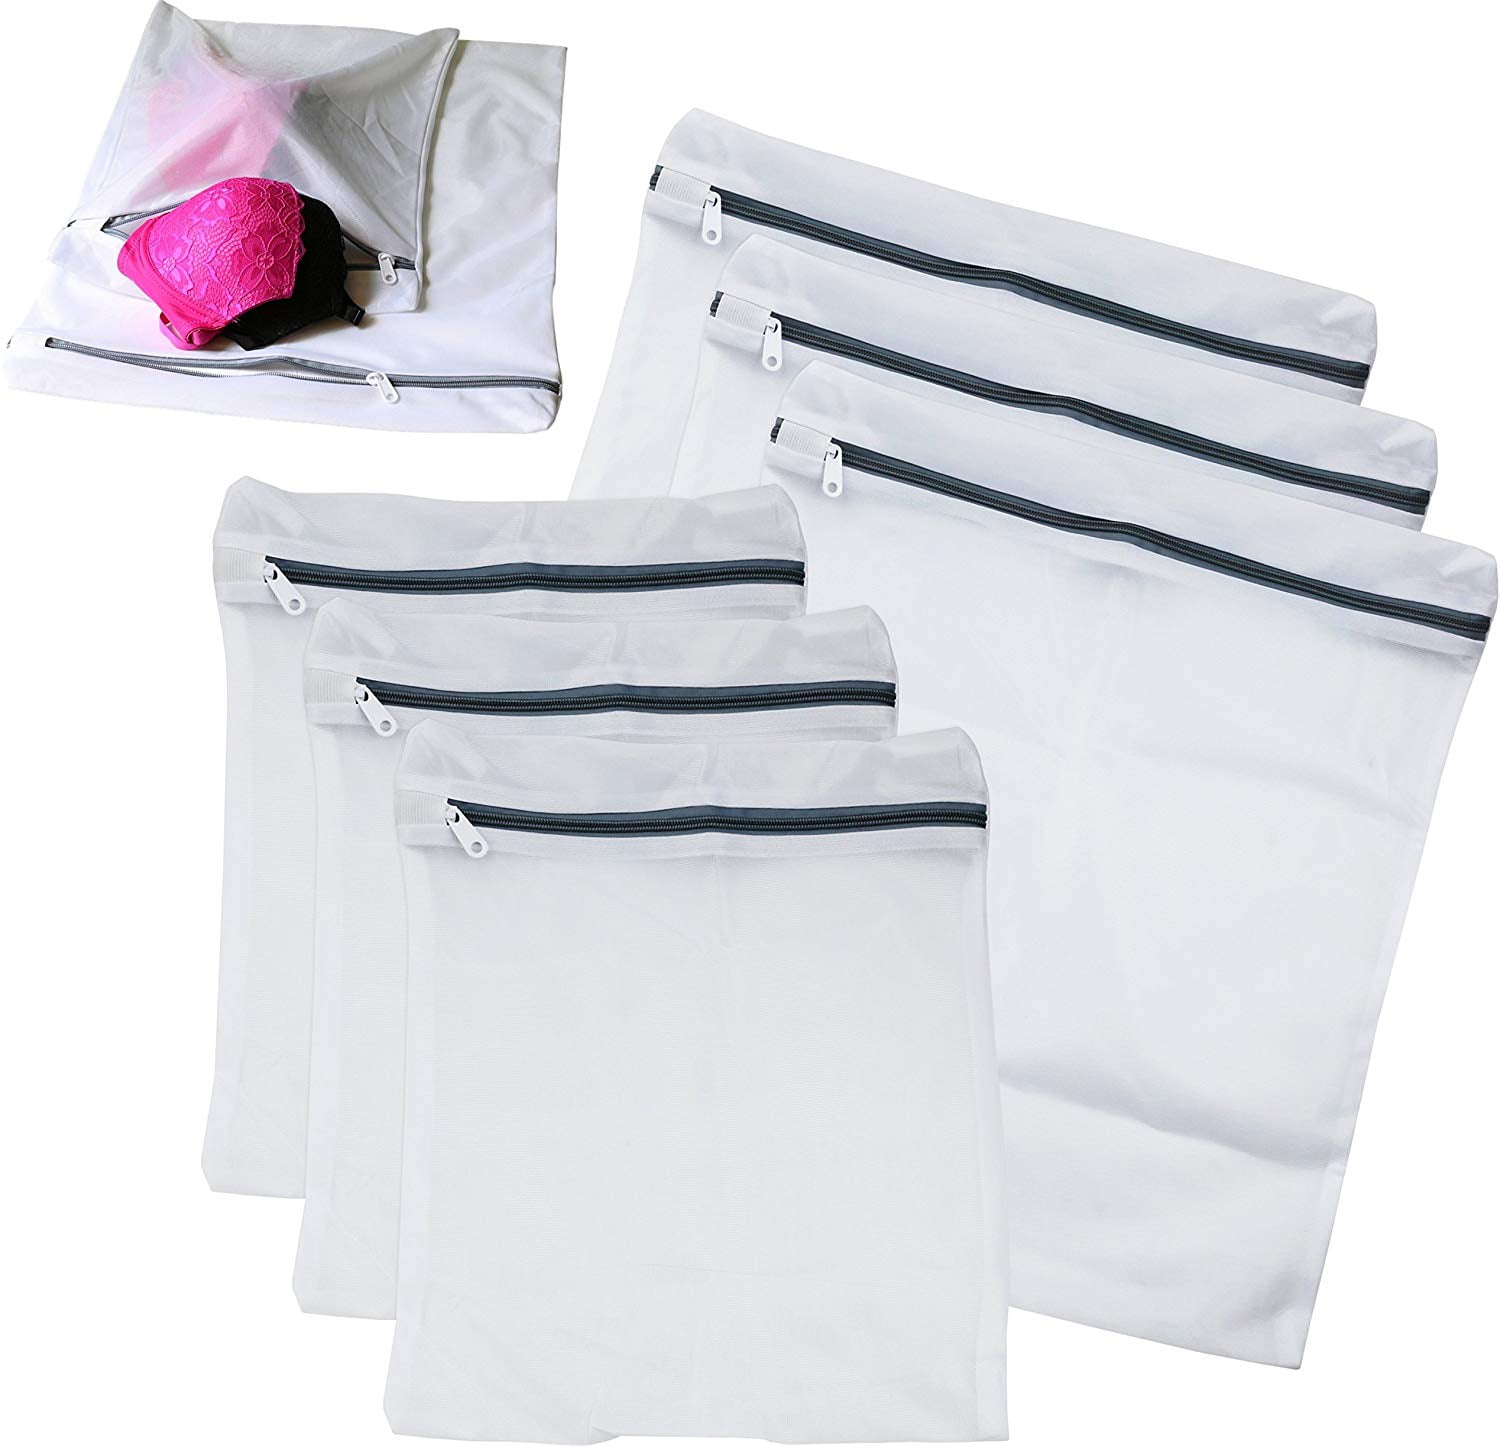 Stocking Laundry Wash Bag 6-Pack Yazer Durable Mesh Wash Laundry Bag Blouse Bra and Lingerie Travel Laundry Bag with Premium Zipper Hosiery Underwear